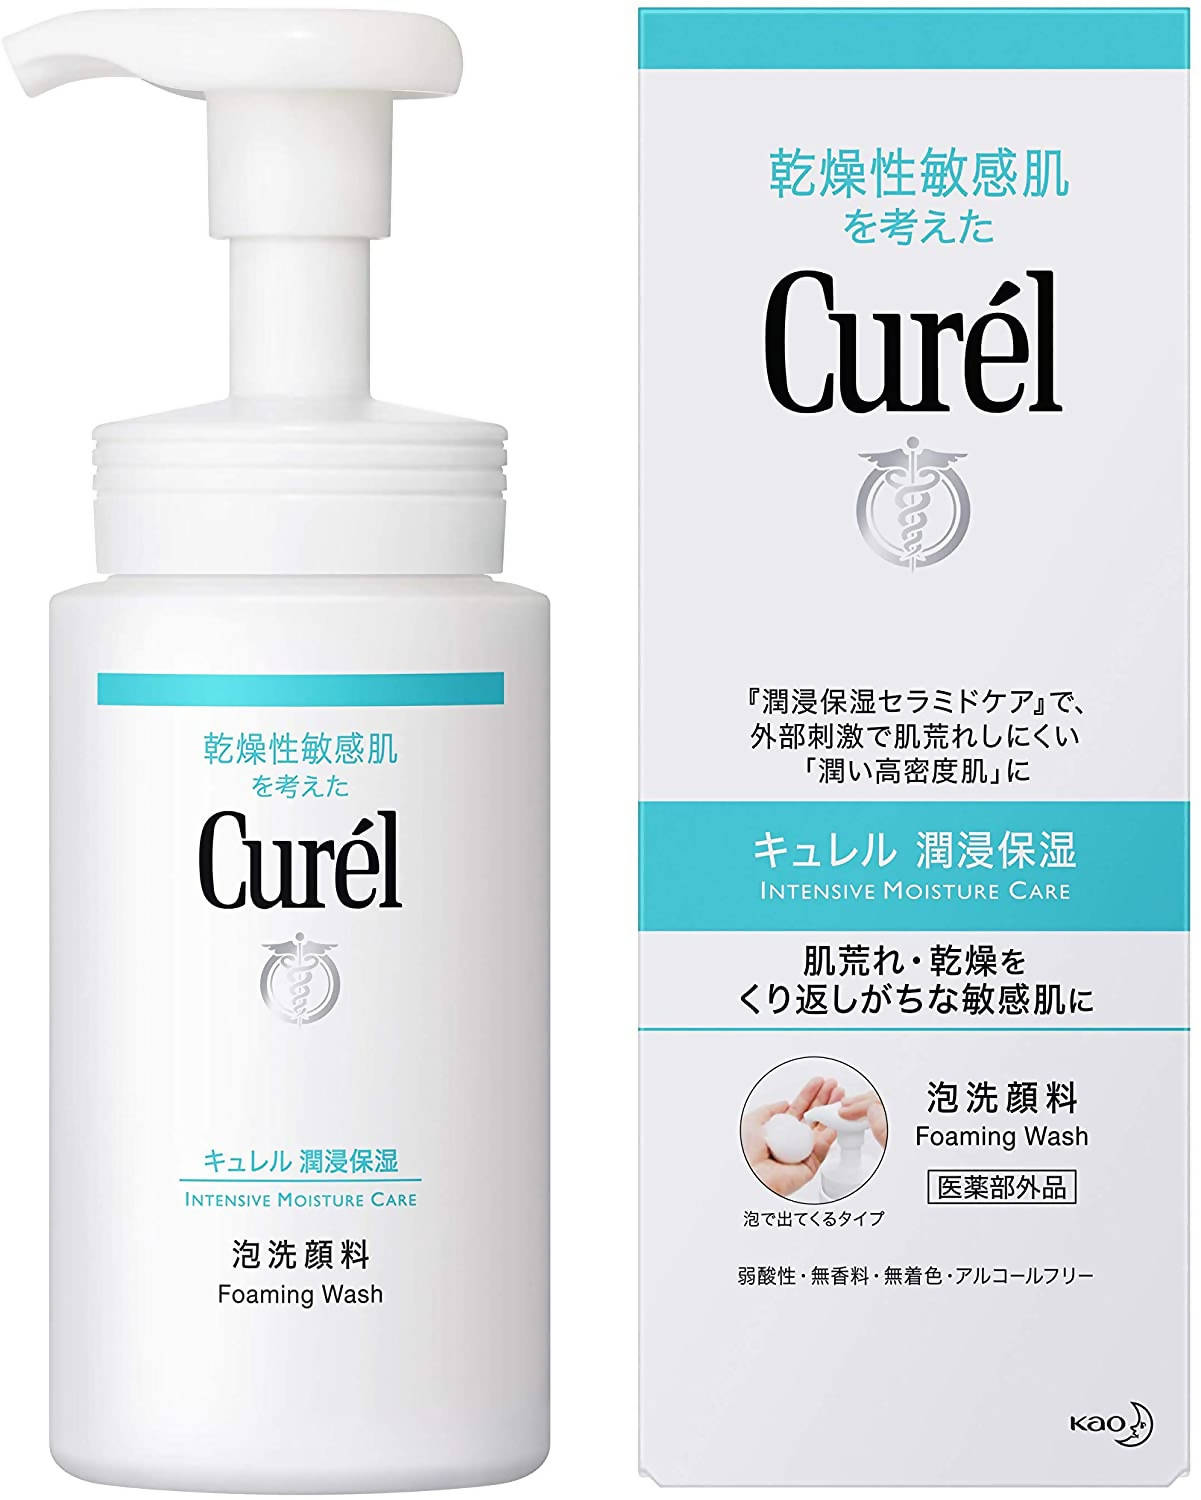 Curel Foaming Face Wash 150ml – Intensive Moisture Care